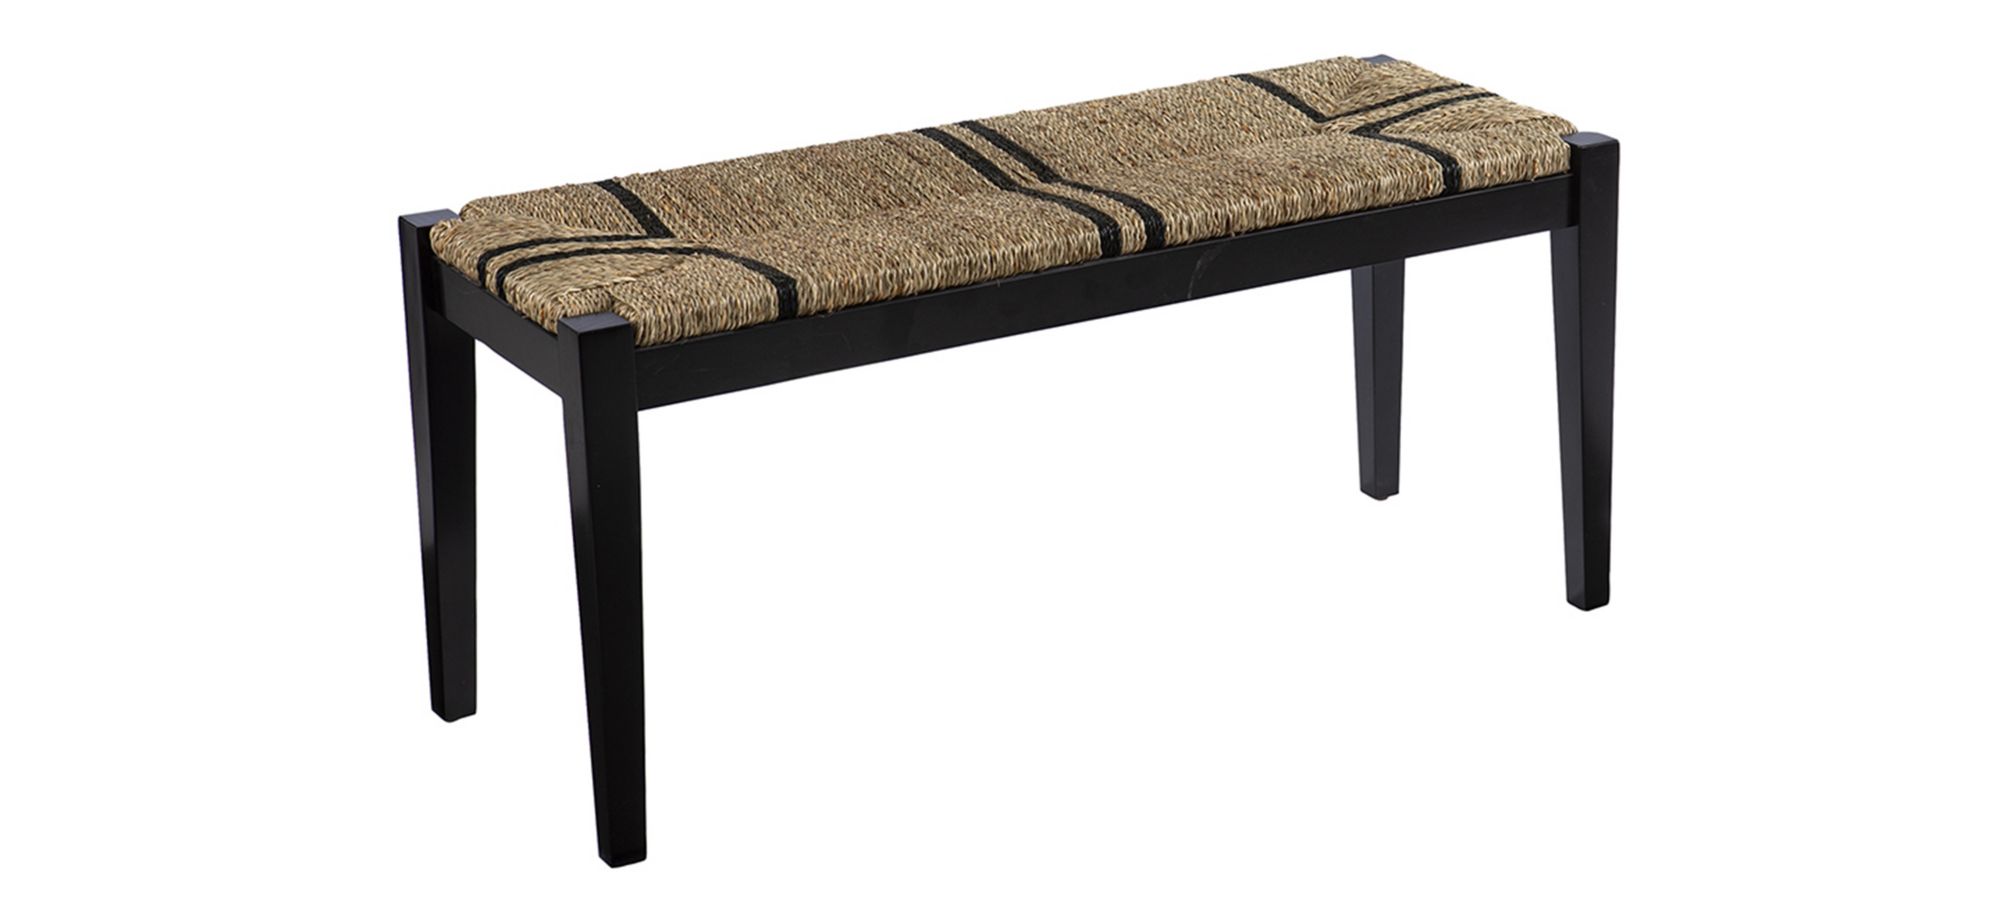 Grogan Seagrass Bench in Black by SEI Furniture